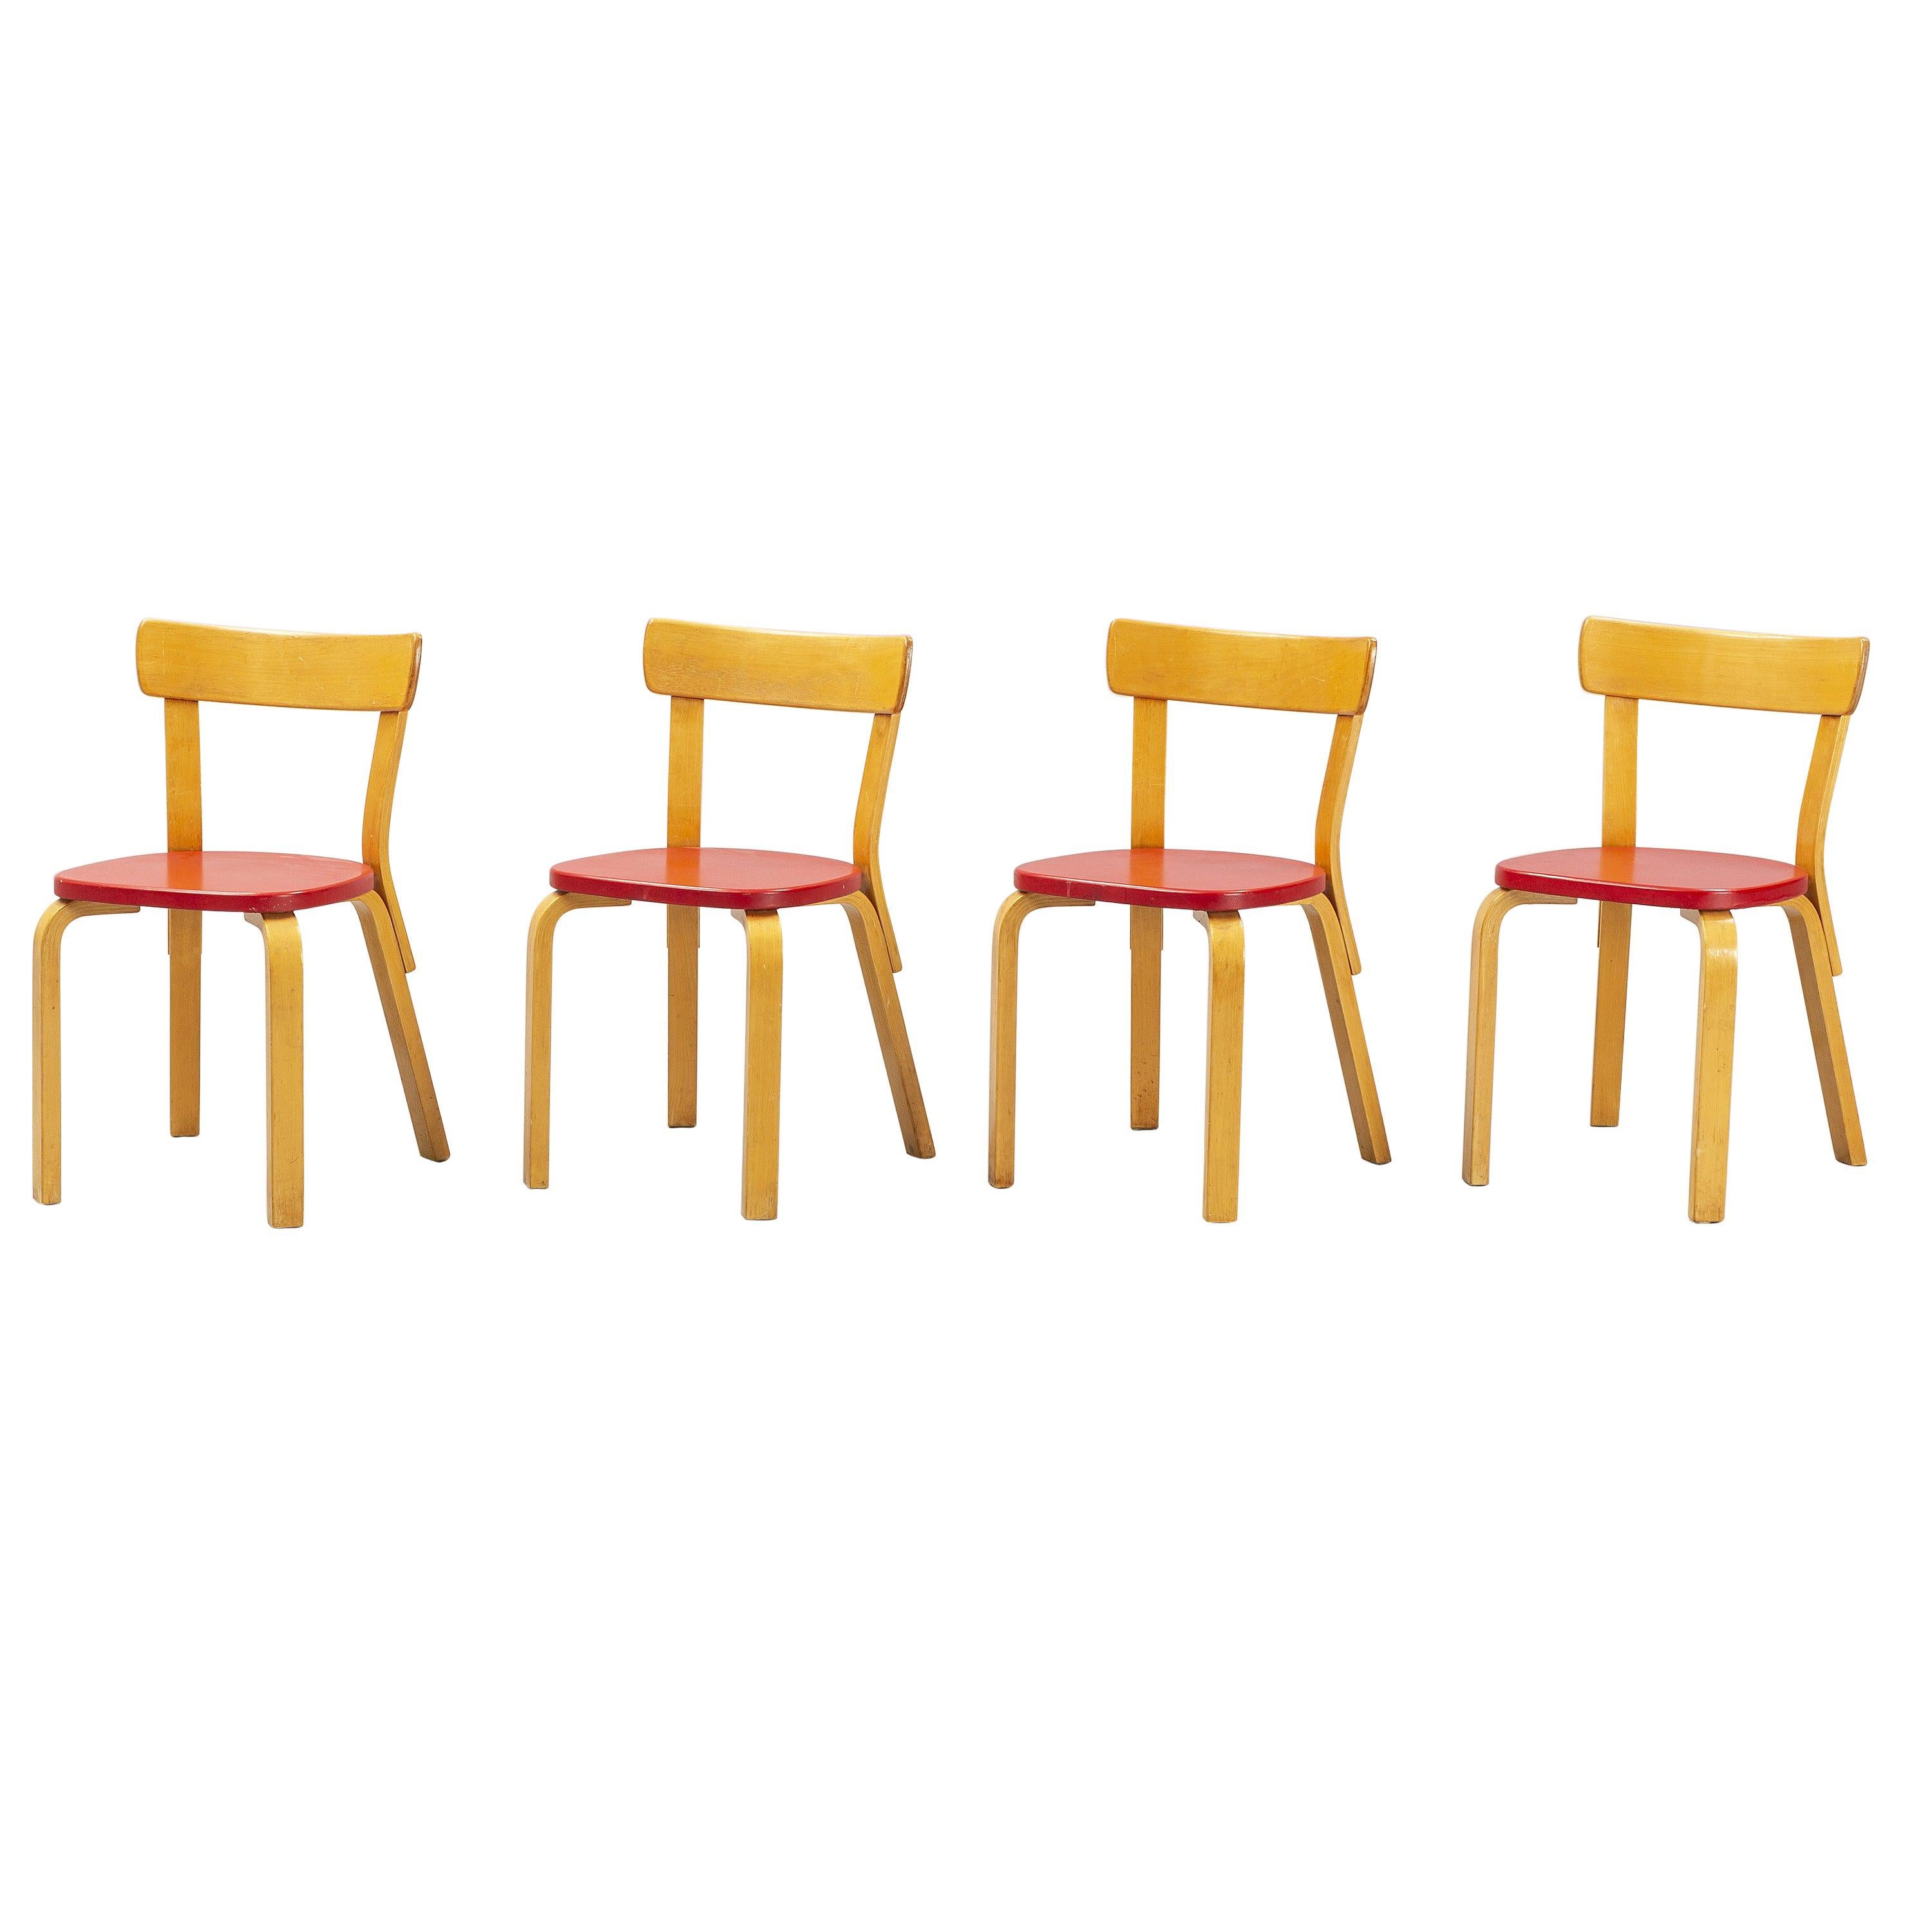 Alvar Aalto, Model 69 Chair, Set of 4 from 1950